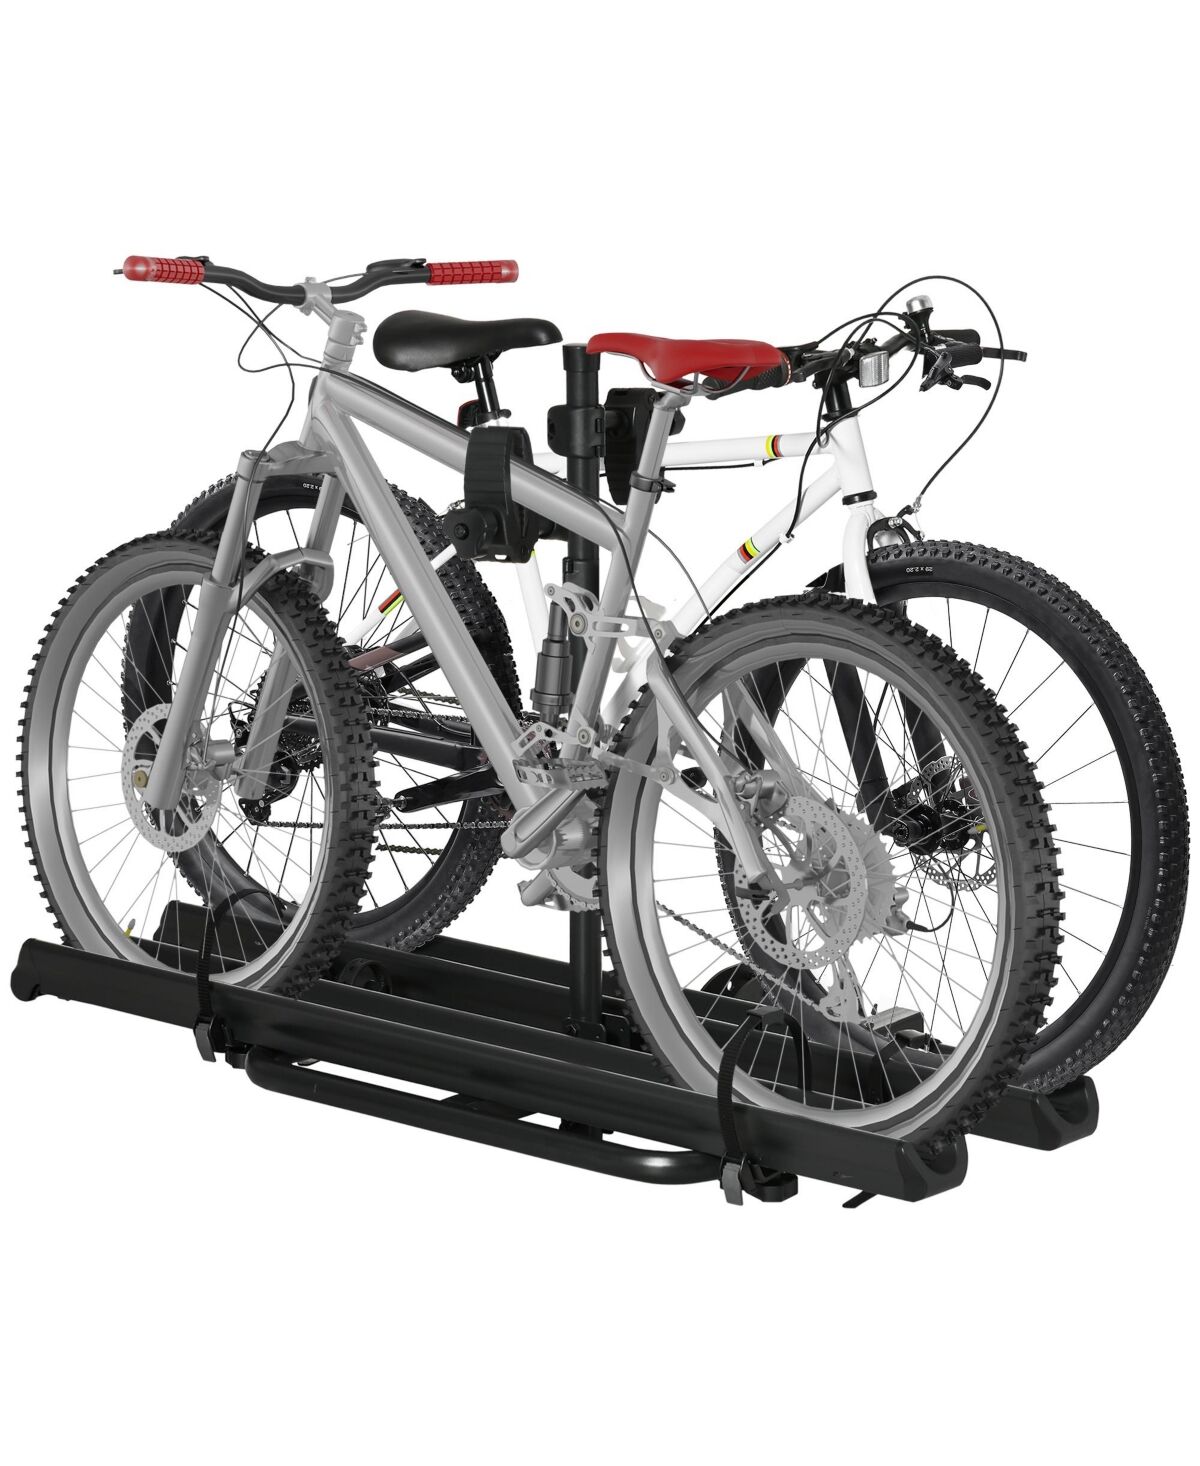 Homcom Heavy-Duty Folding Car Bike Rack for 2 Bikes, Bicycle Storage, Road, Fat Tire, & Mountain Rear Bike Accessories for Suv, Sedan, Hatchback, Mini